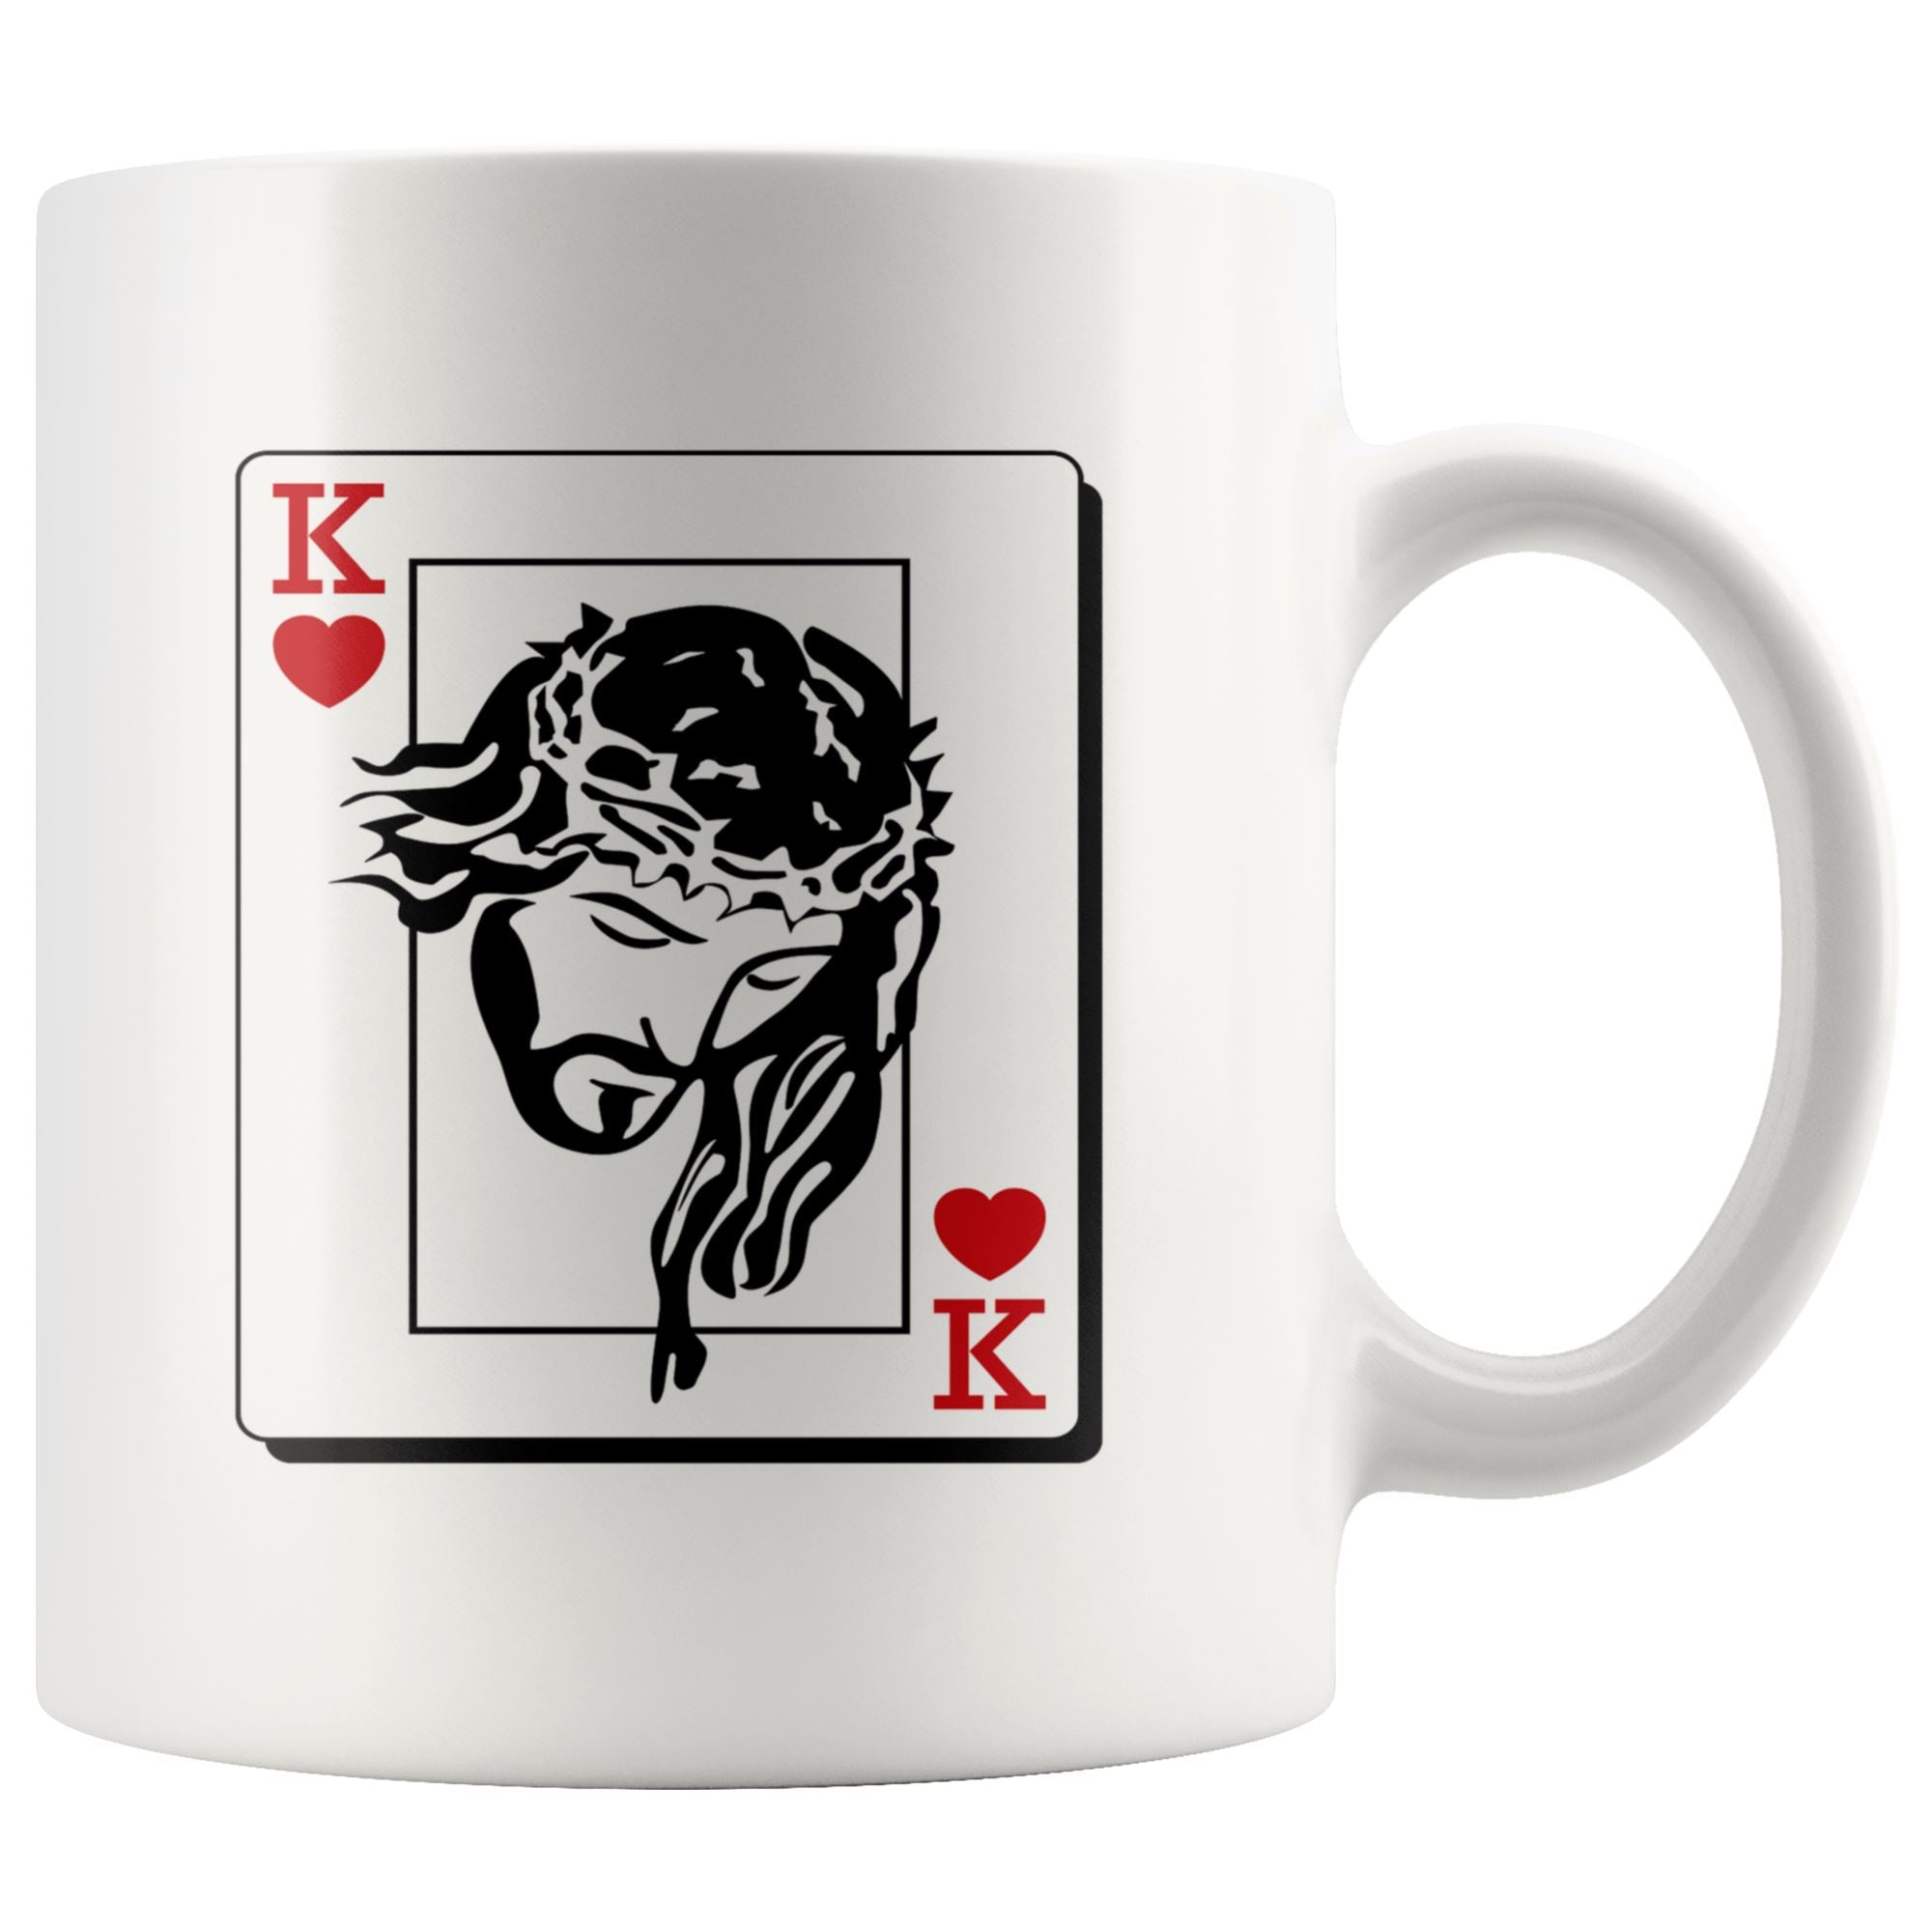 King of Kings Mug Drinkware teelaunch 11oz Mug 